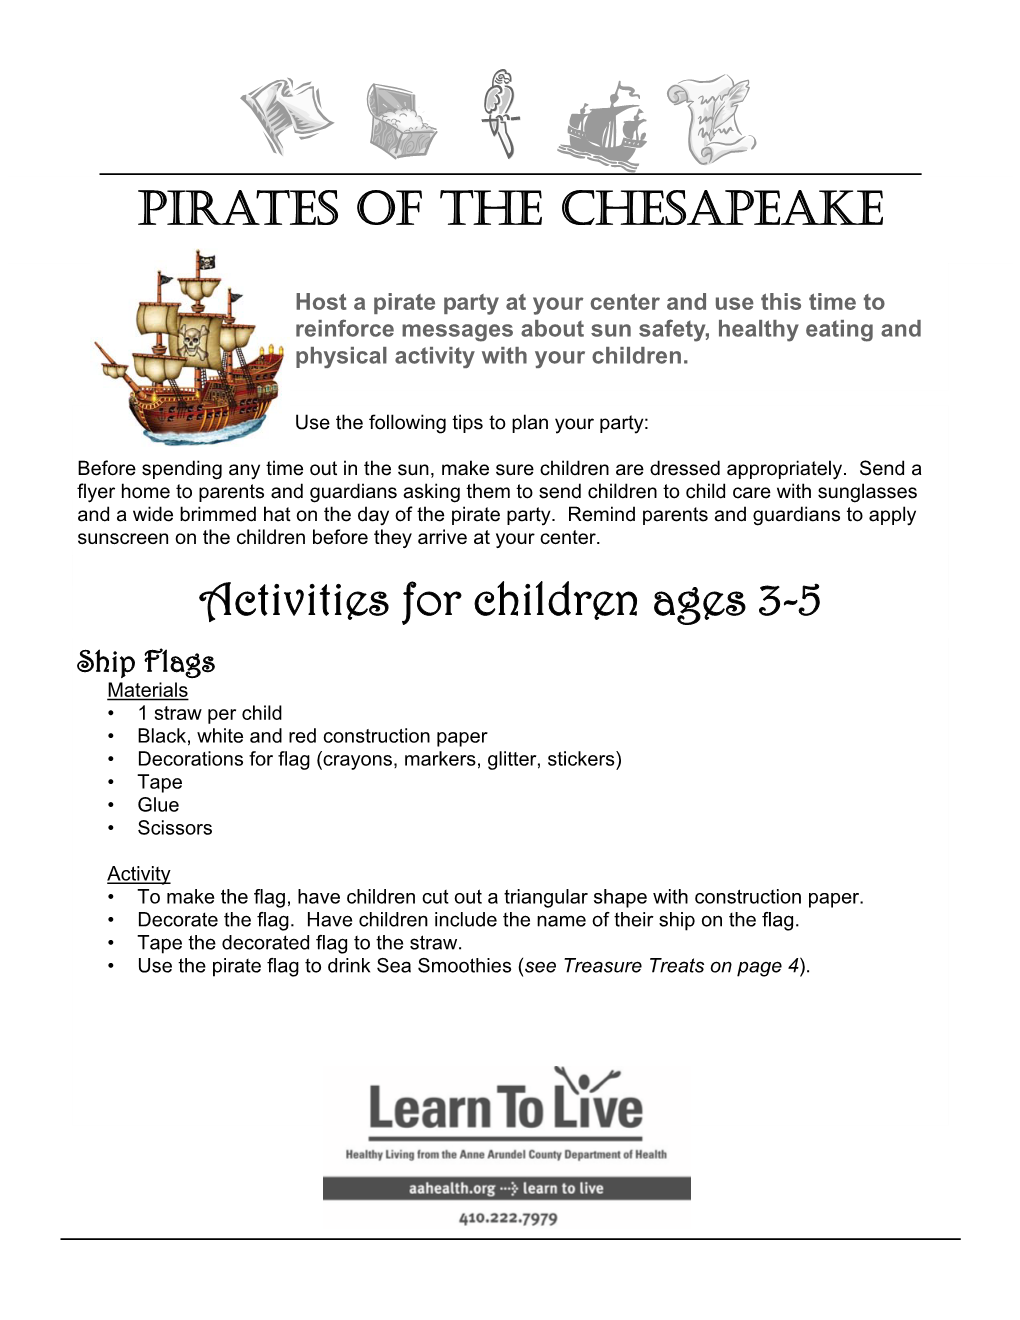 Pirates of the Chesapeake Activity Sheet